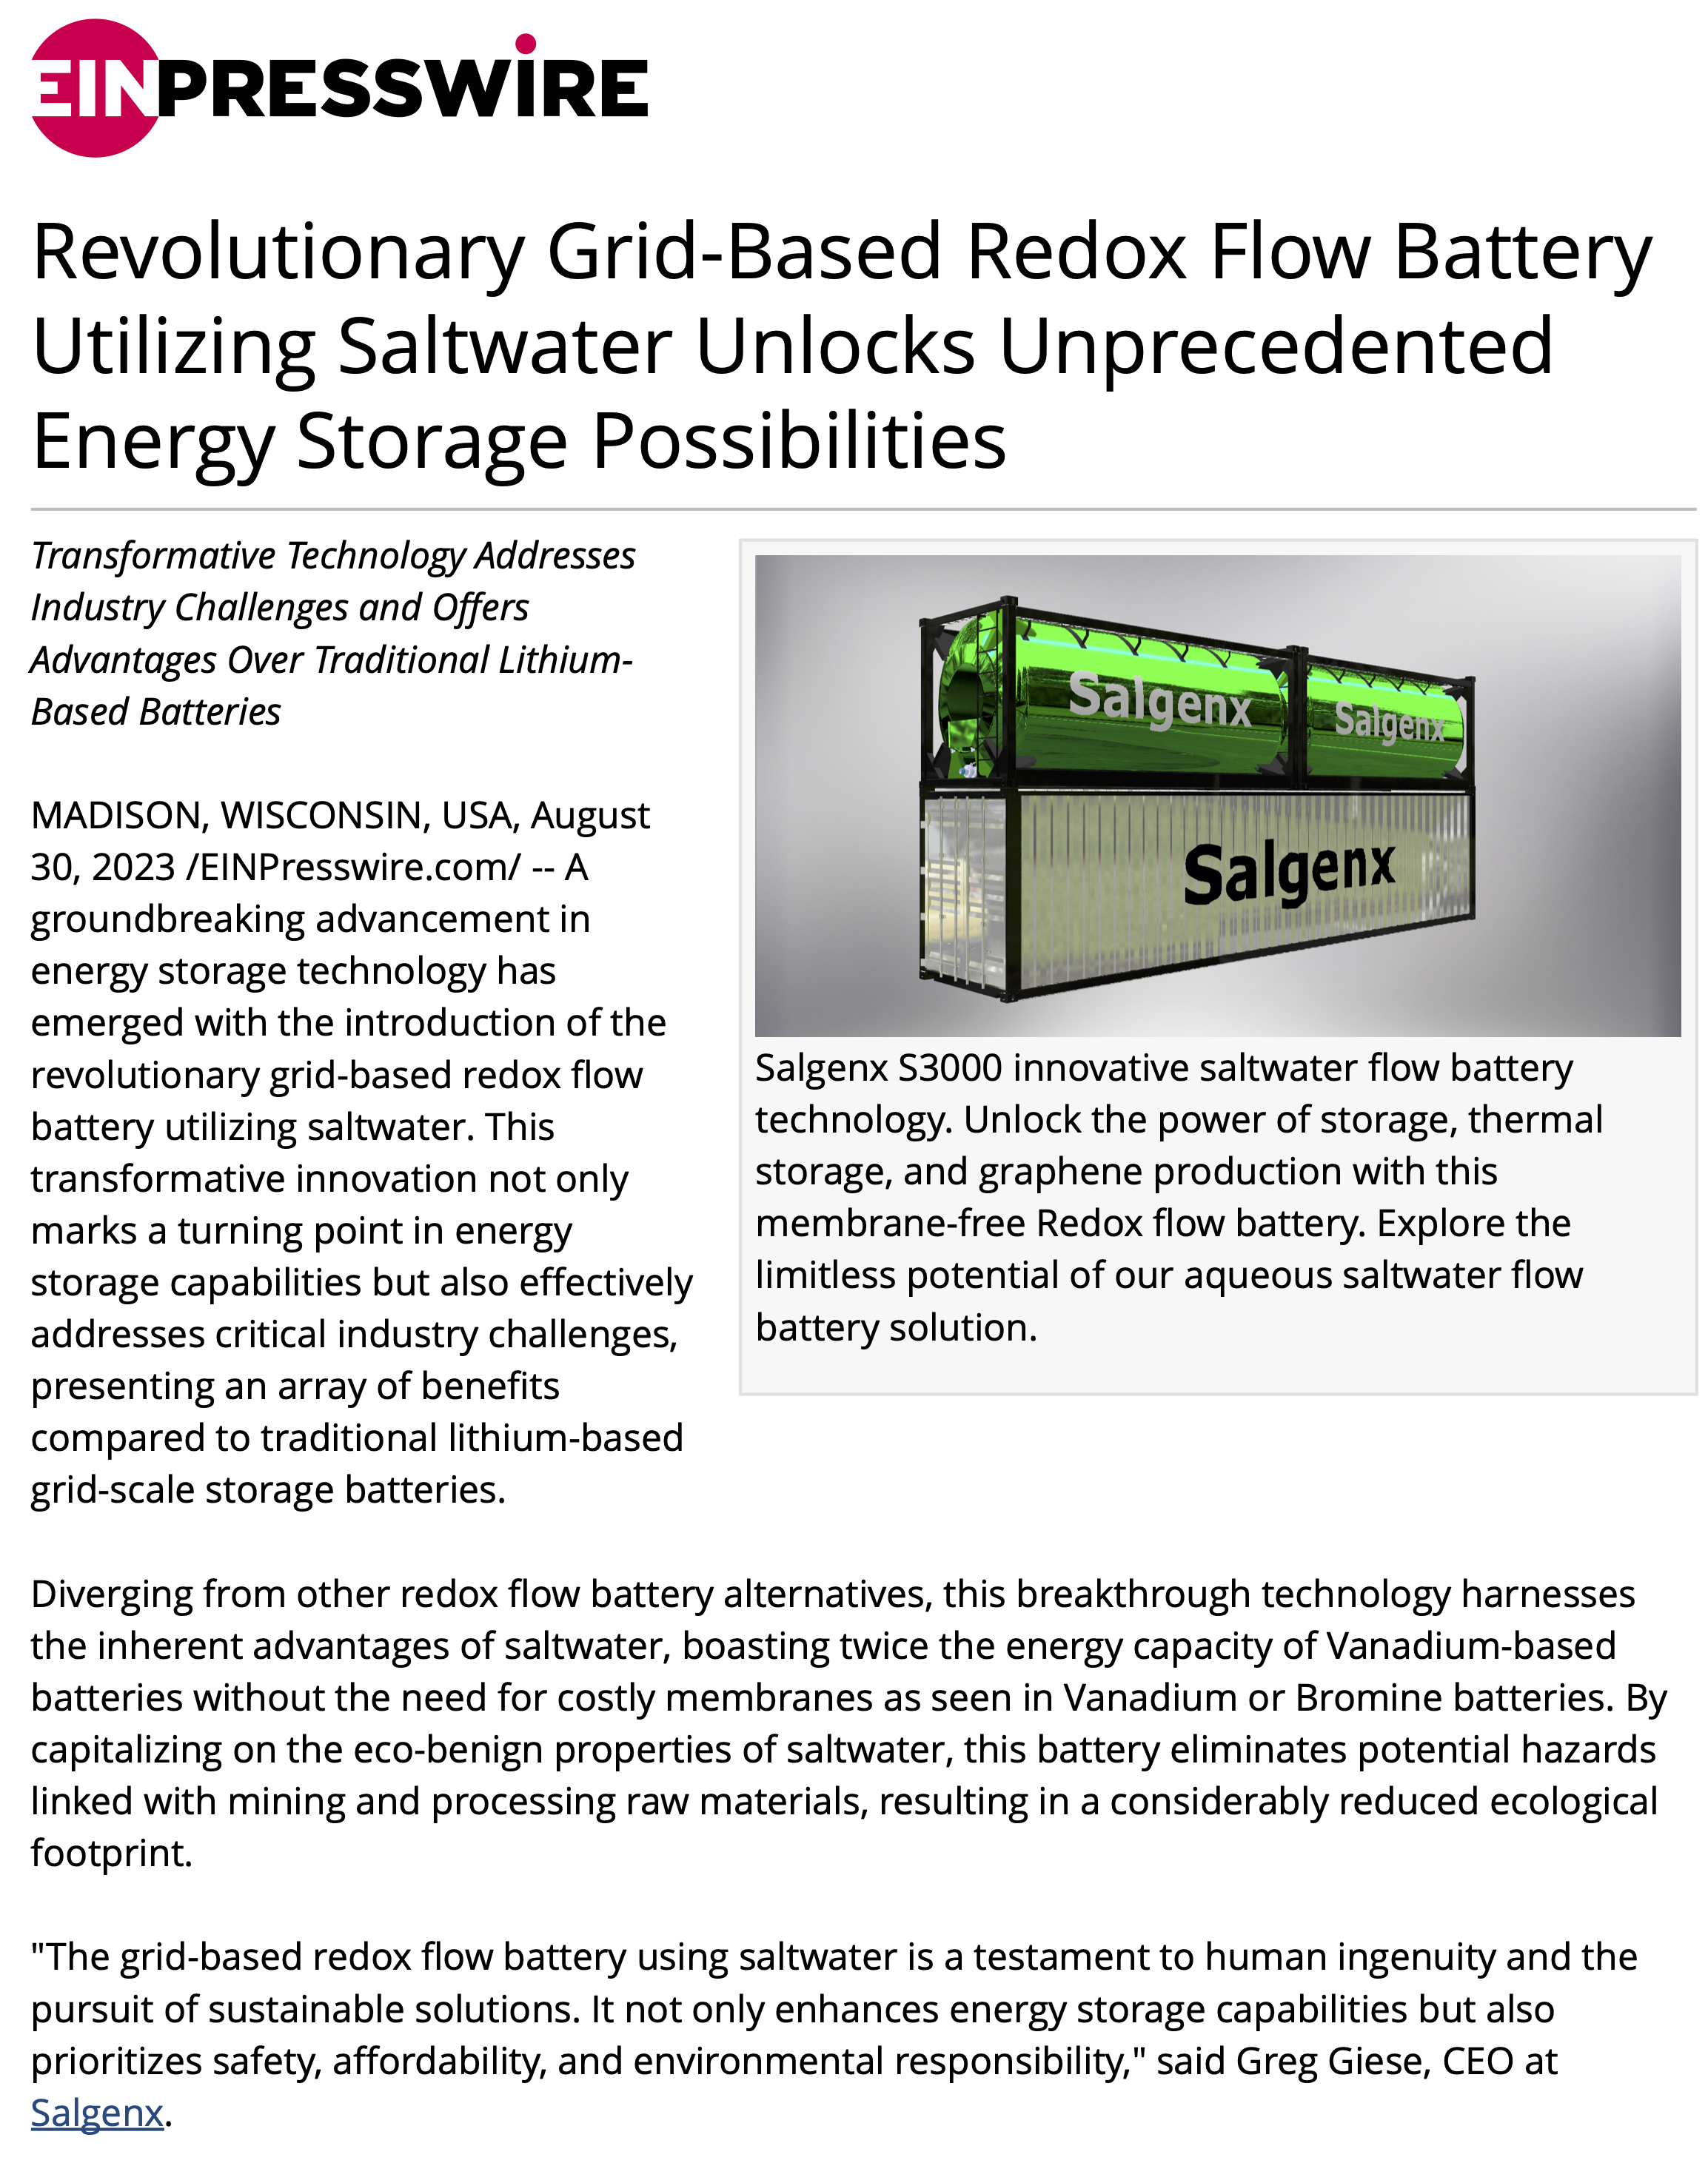 Revolutionary Grid-Based Redox Flow Battery Utilizing Saltwater Unlocks Unprecedented Energy Storage Possibilities